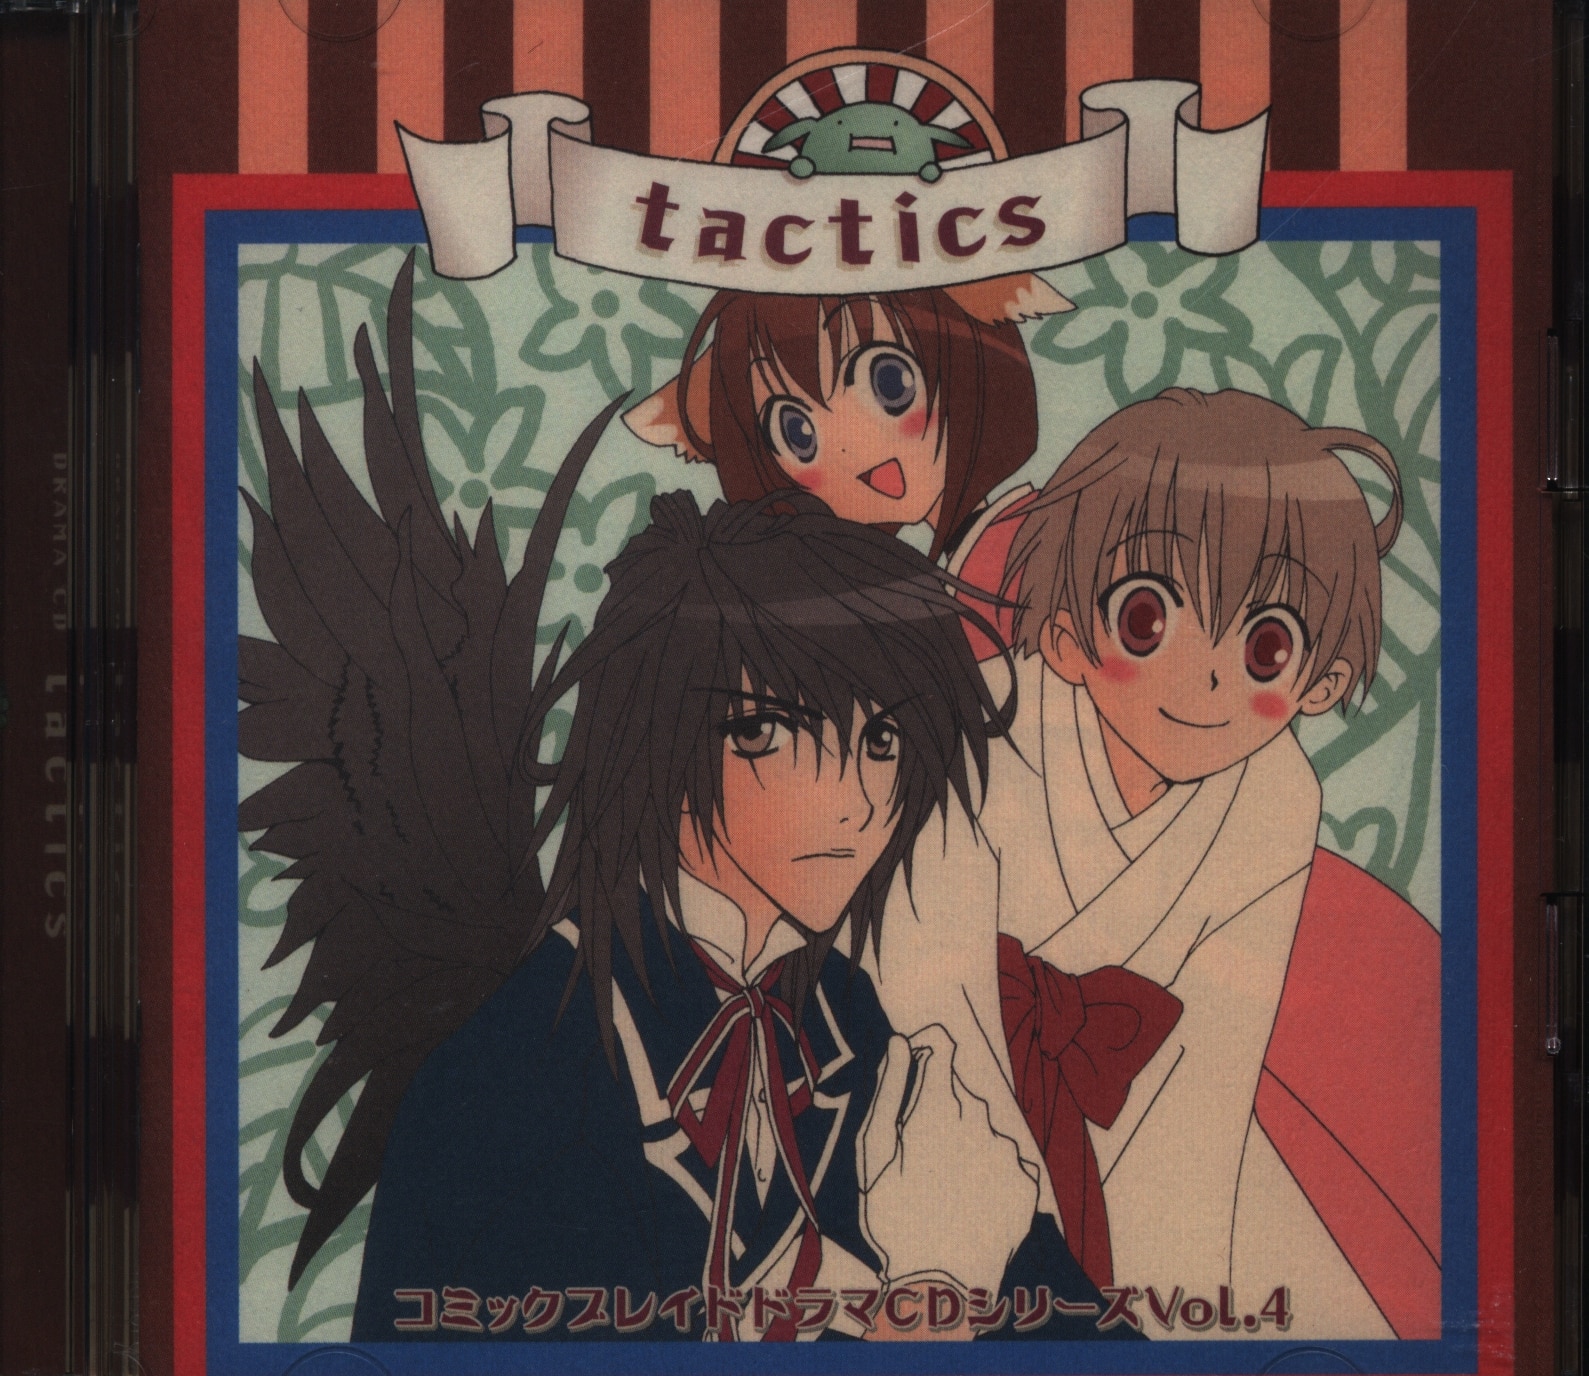 Tactics Vol 1 & 2 English Manga Anime Comic Book | eBay